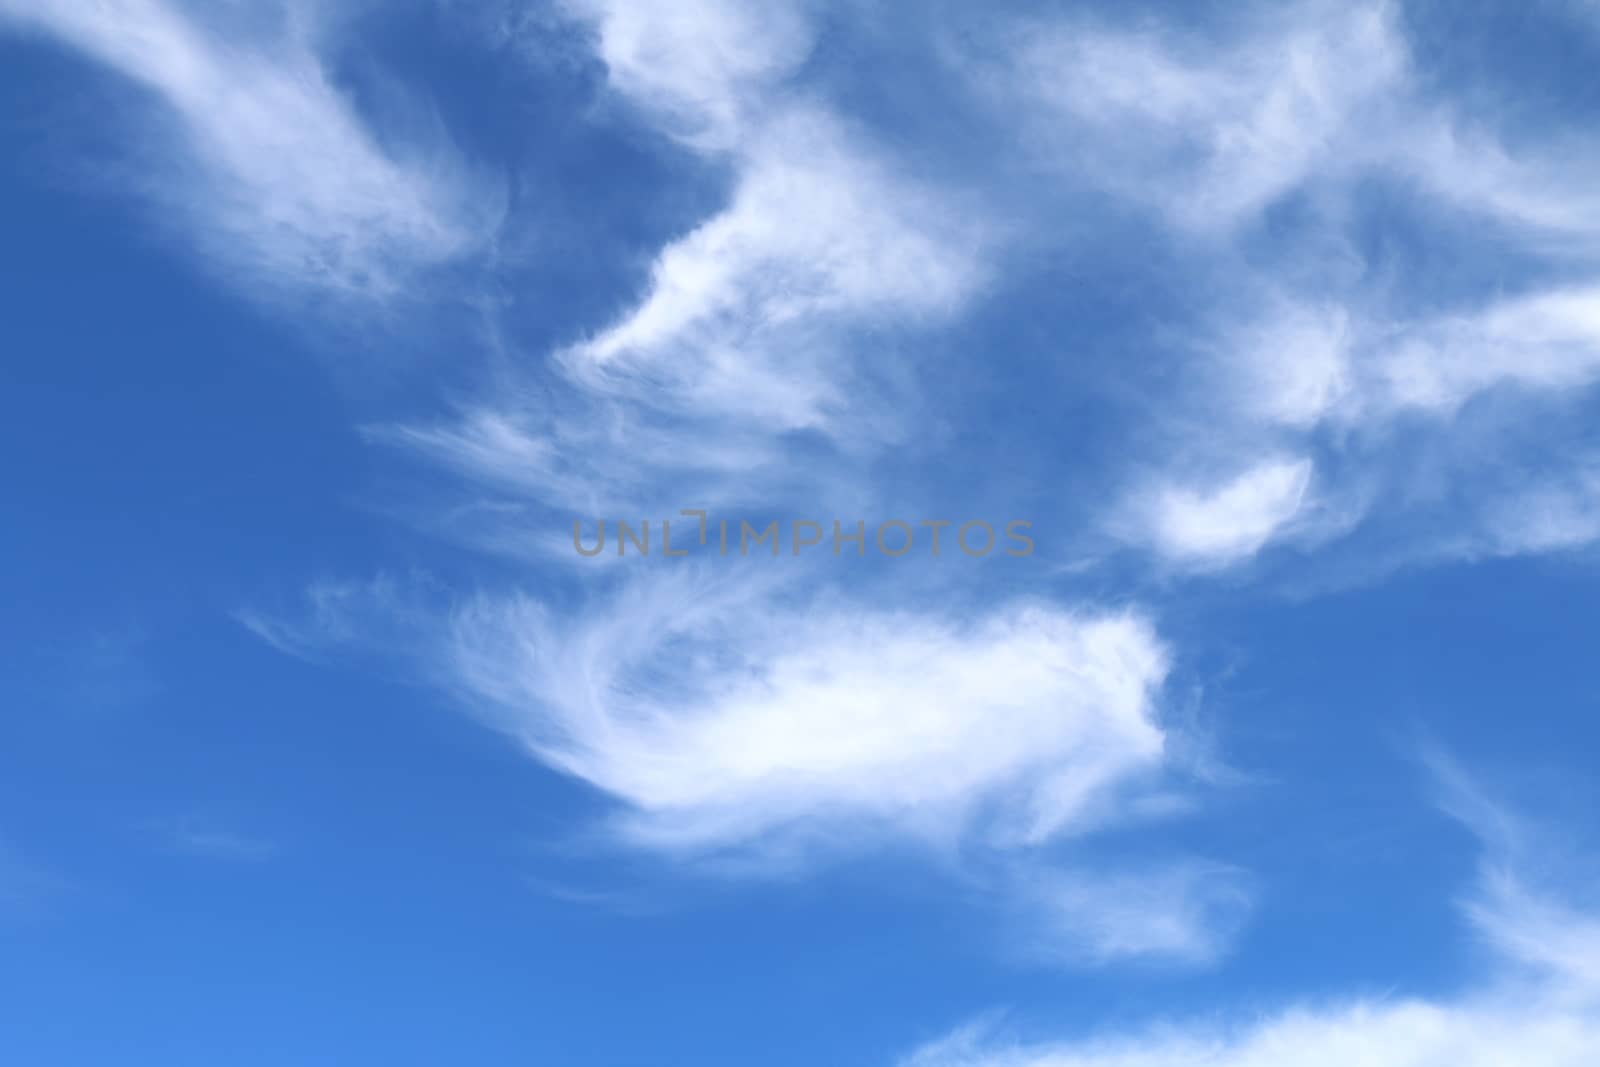 Sky, Clear sky soft cloud, Sky blue background, sky view by cgdeaw